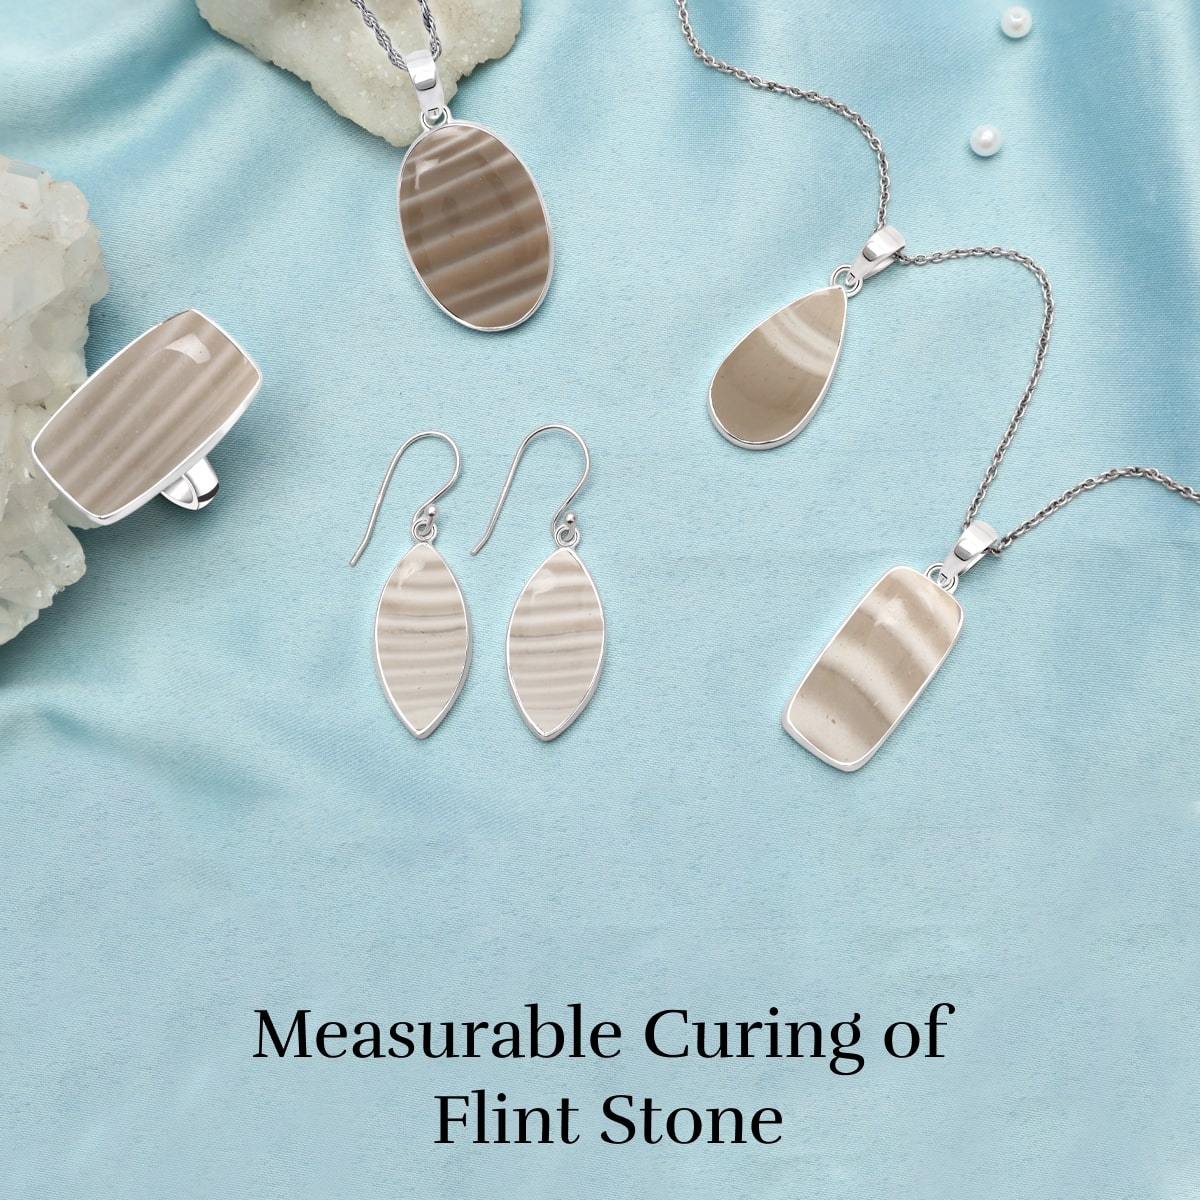 Flint Gemstone Healing Properties